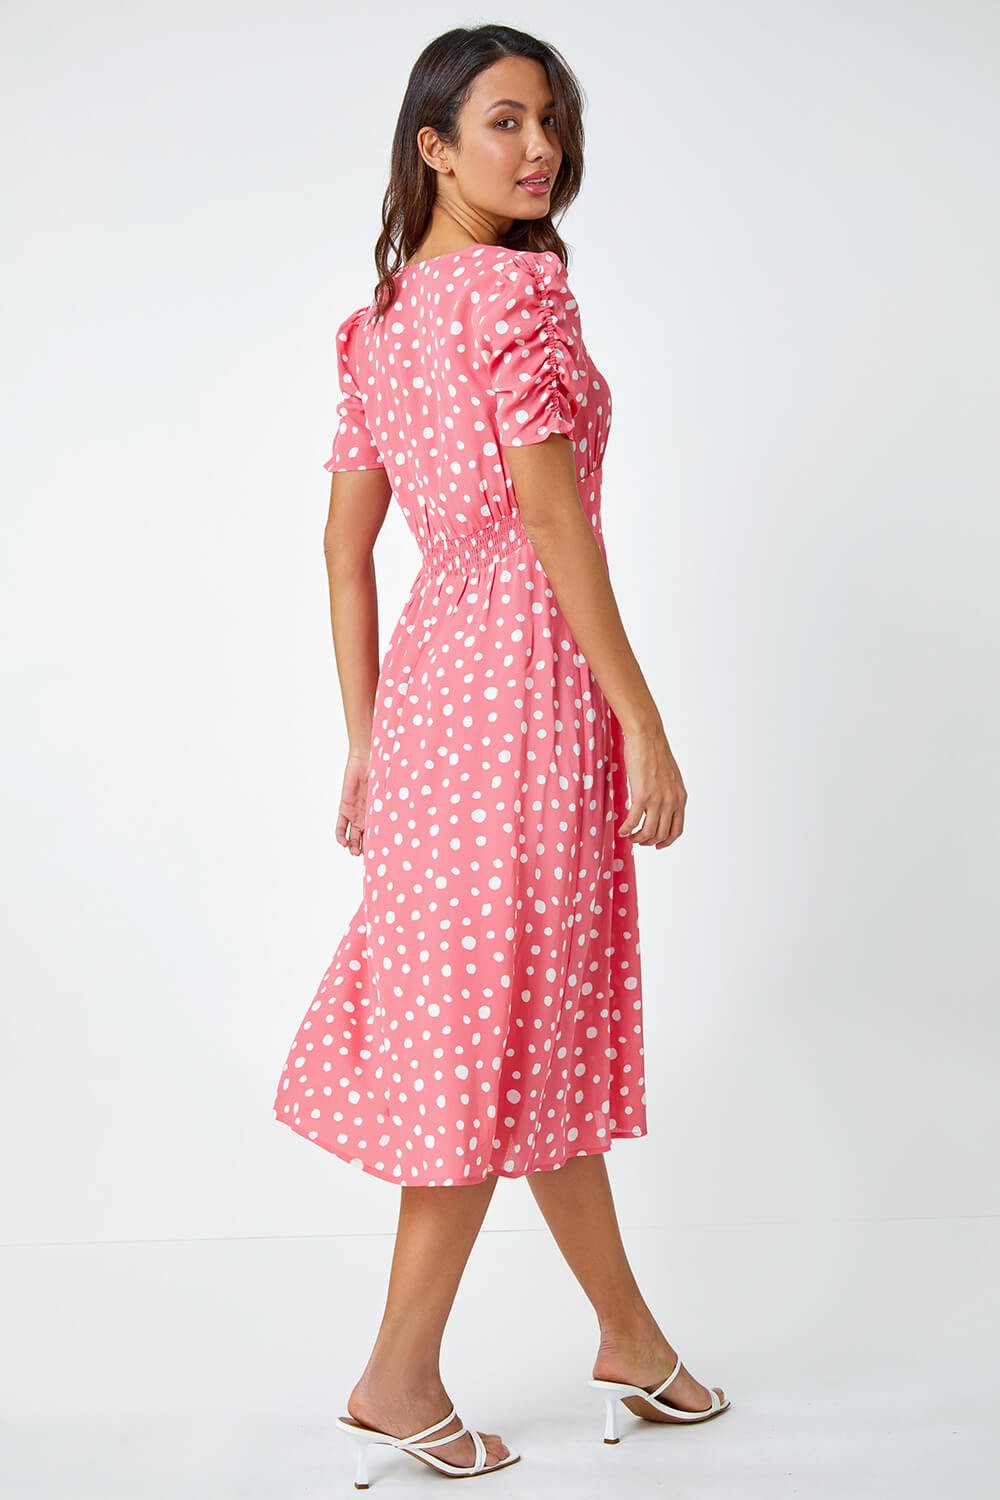 PINK Polka Dot Ruched Sleeve Midi Dress, Image 3 of 5